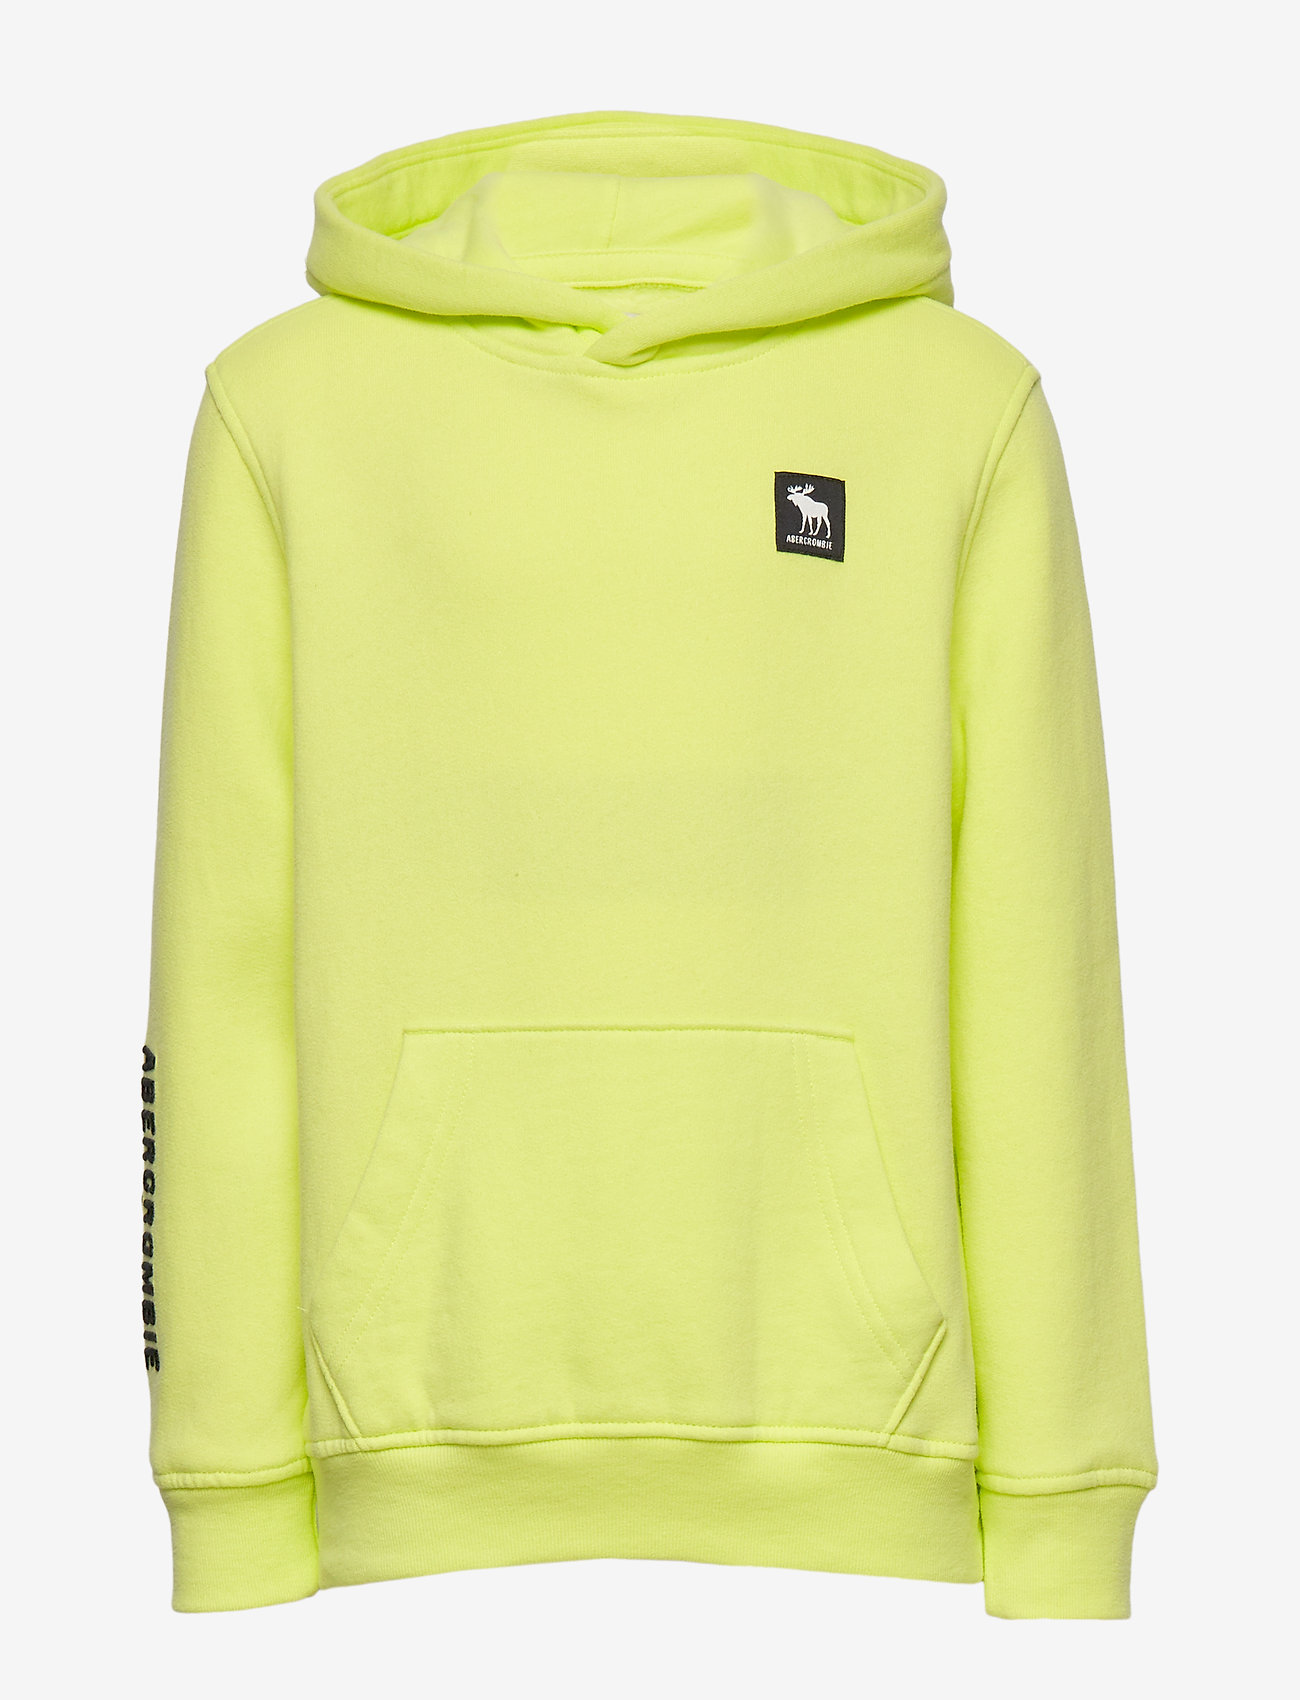 light yellow sweatshirt